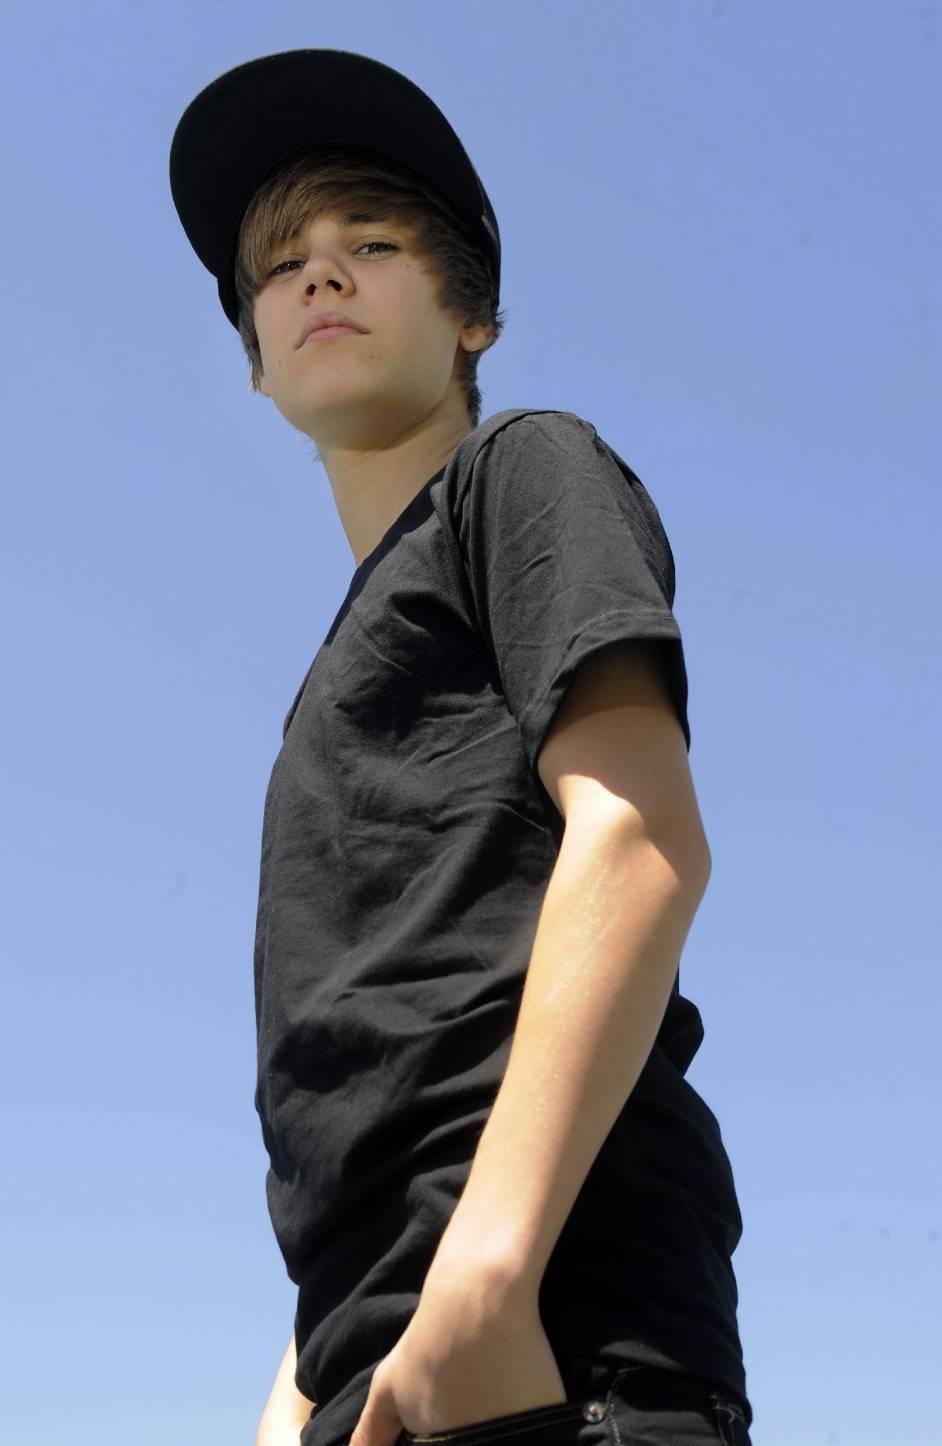 Photo №7139 Justin Bieber.